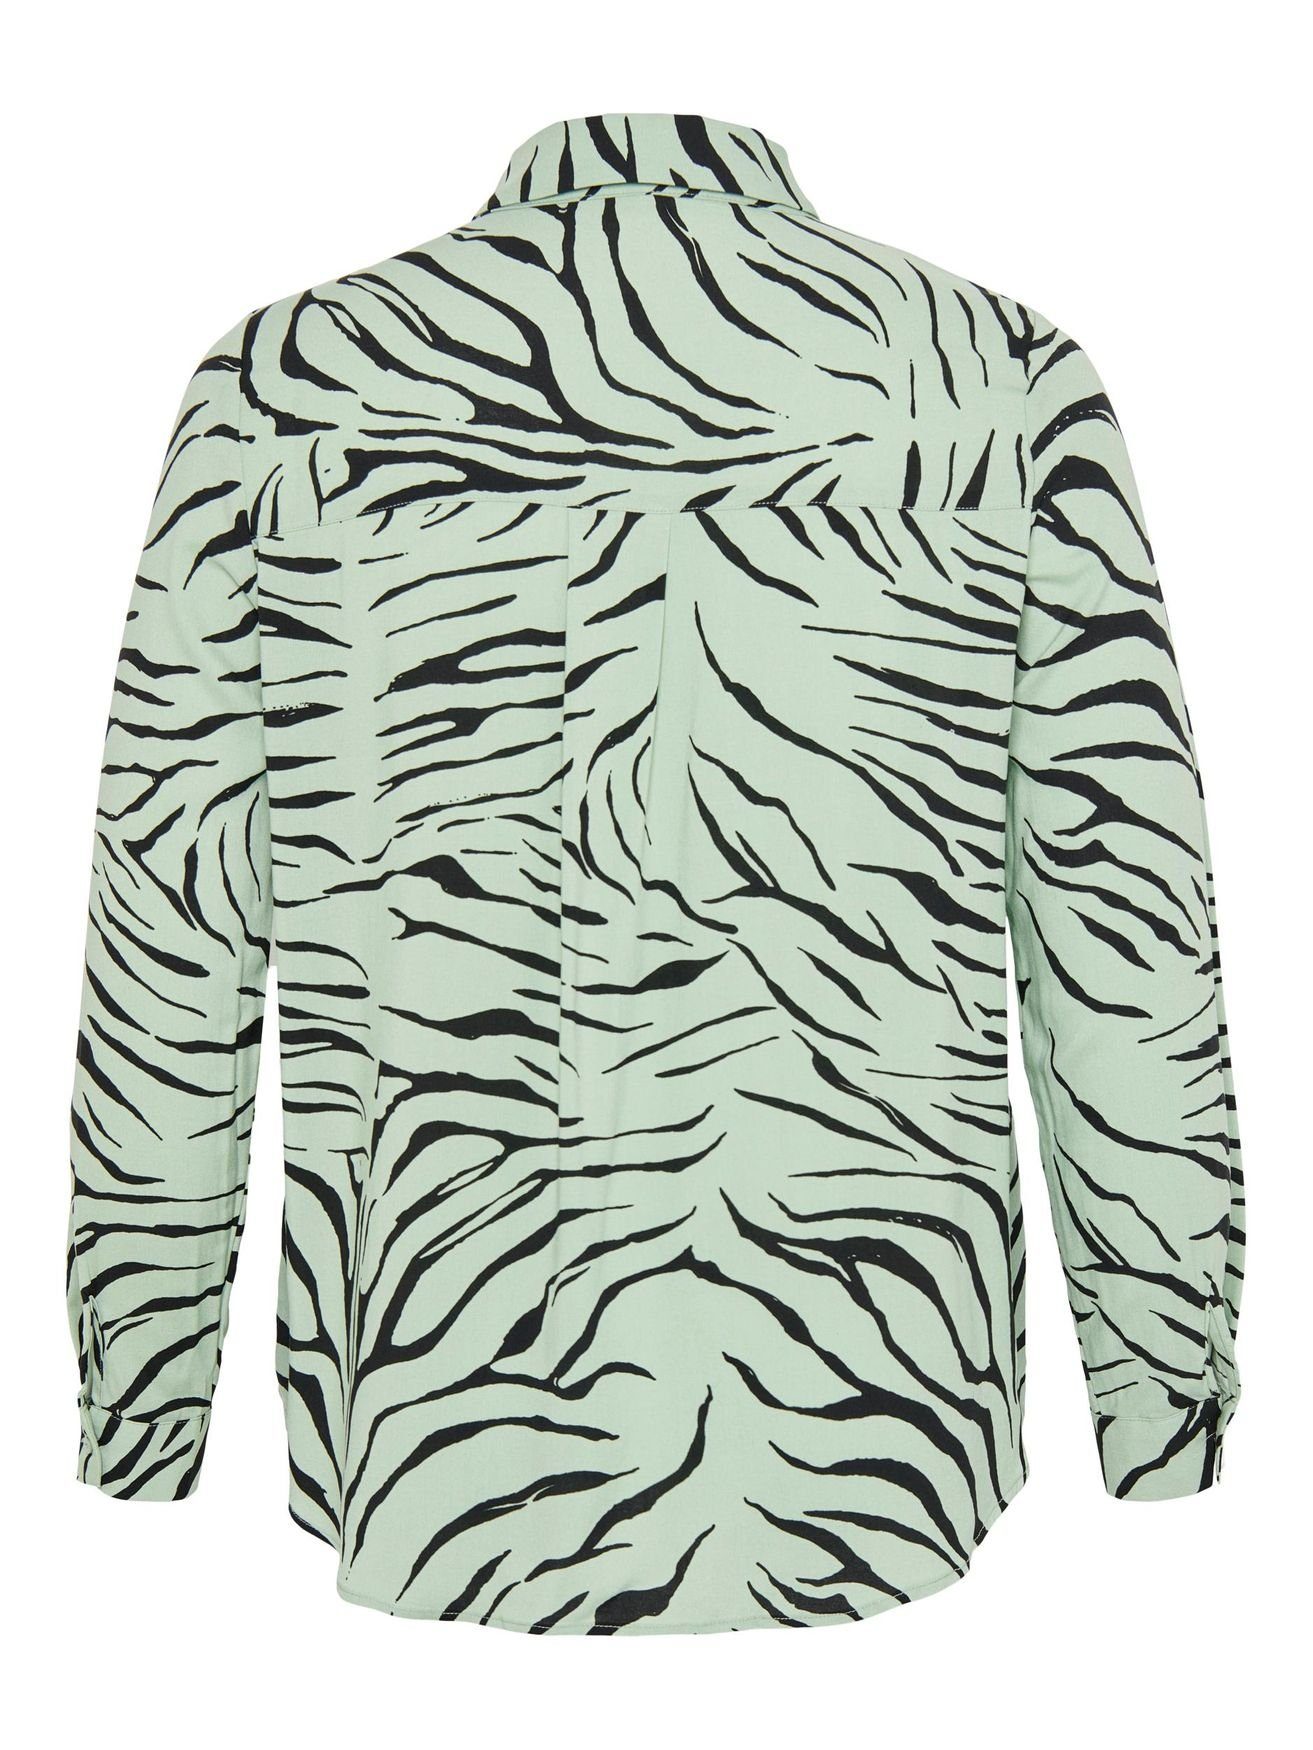 Übergrößen Grün ONLY in Animal Zebra Bluse Size Hemd Plus Shirt CARNOVA CARMAKOMA Blusenshirt 4804